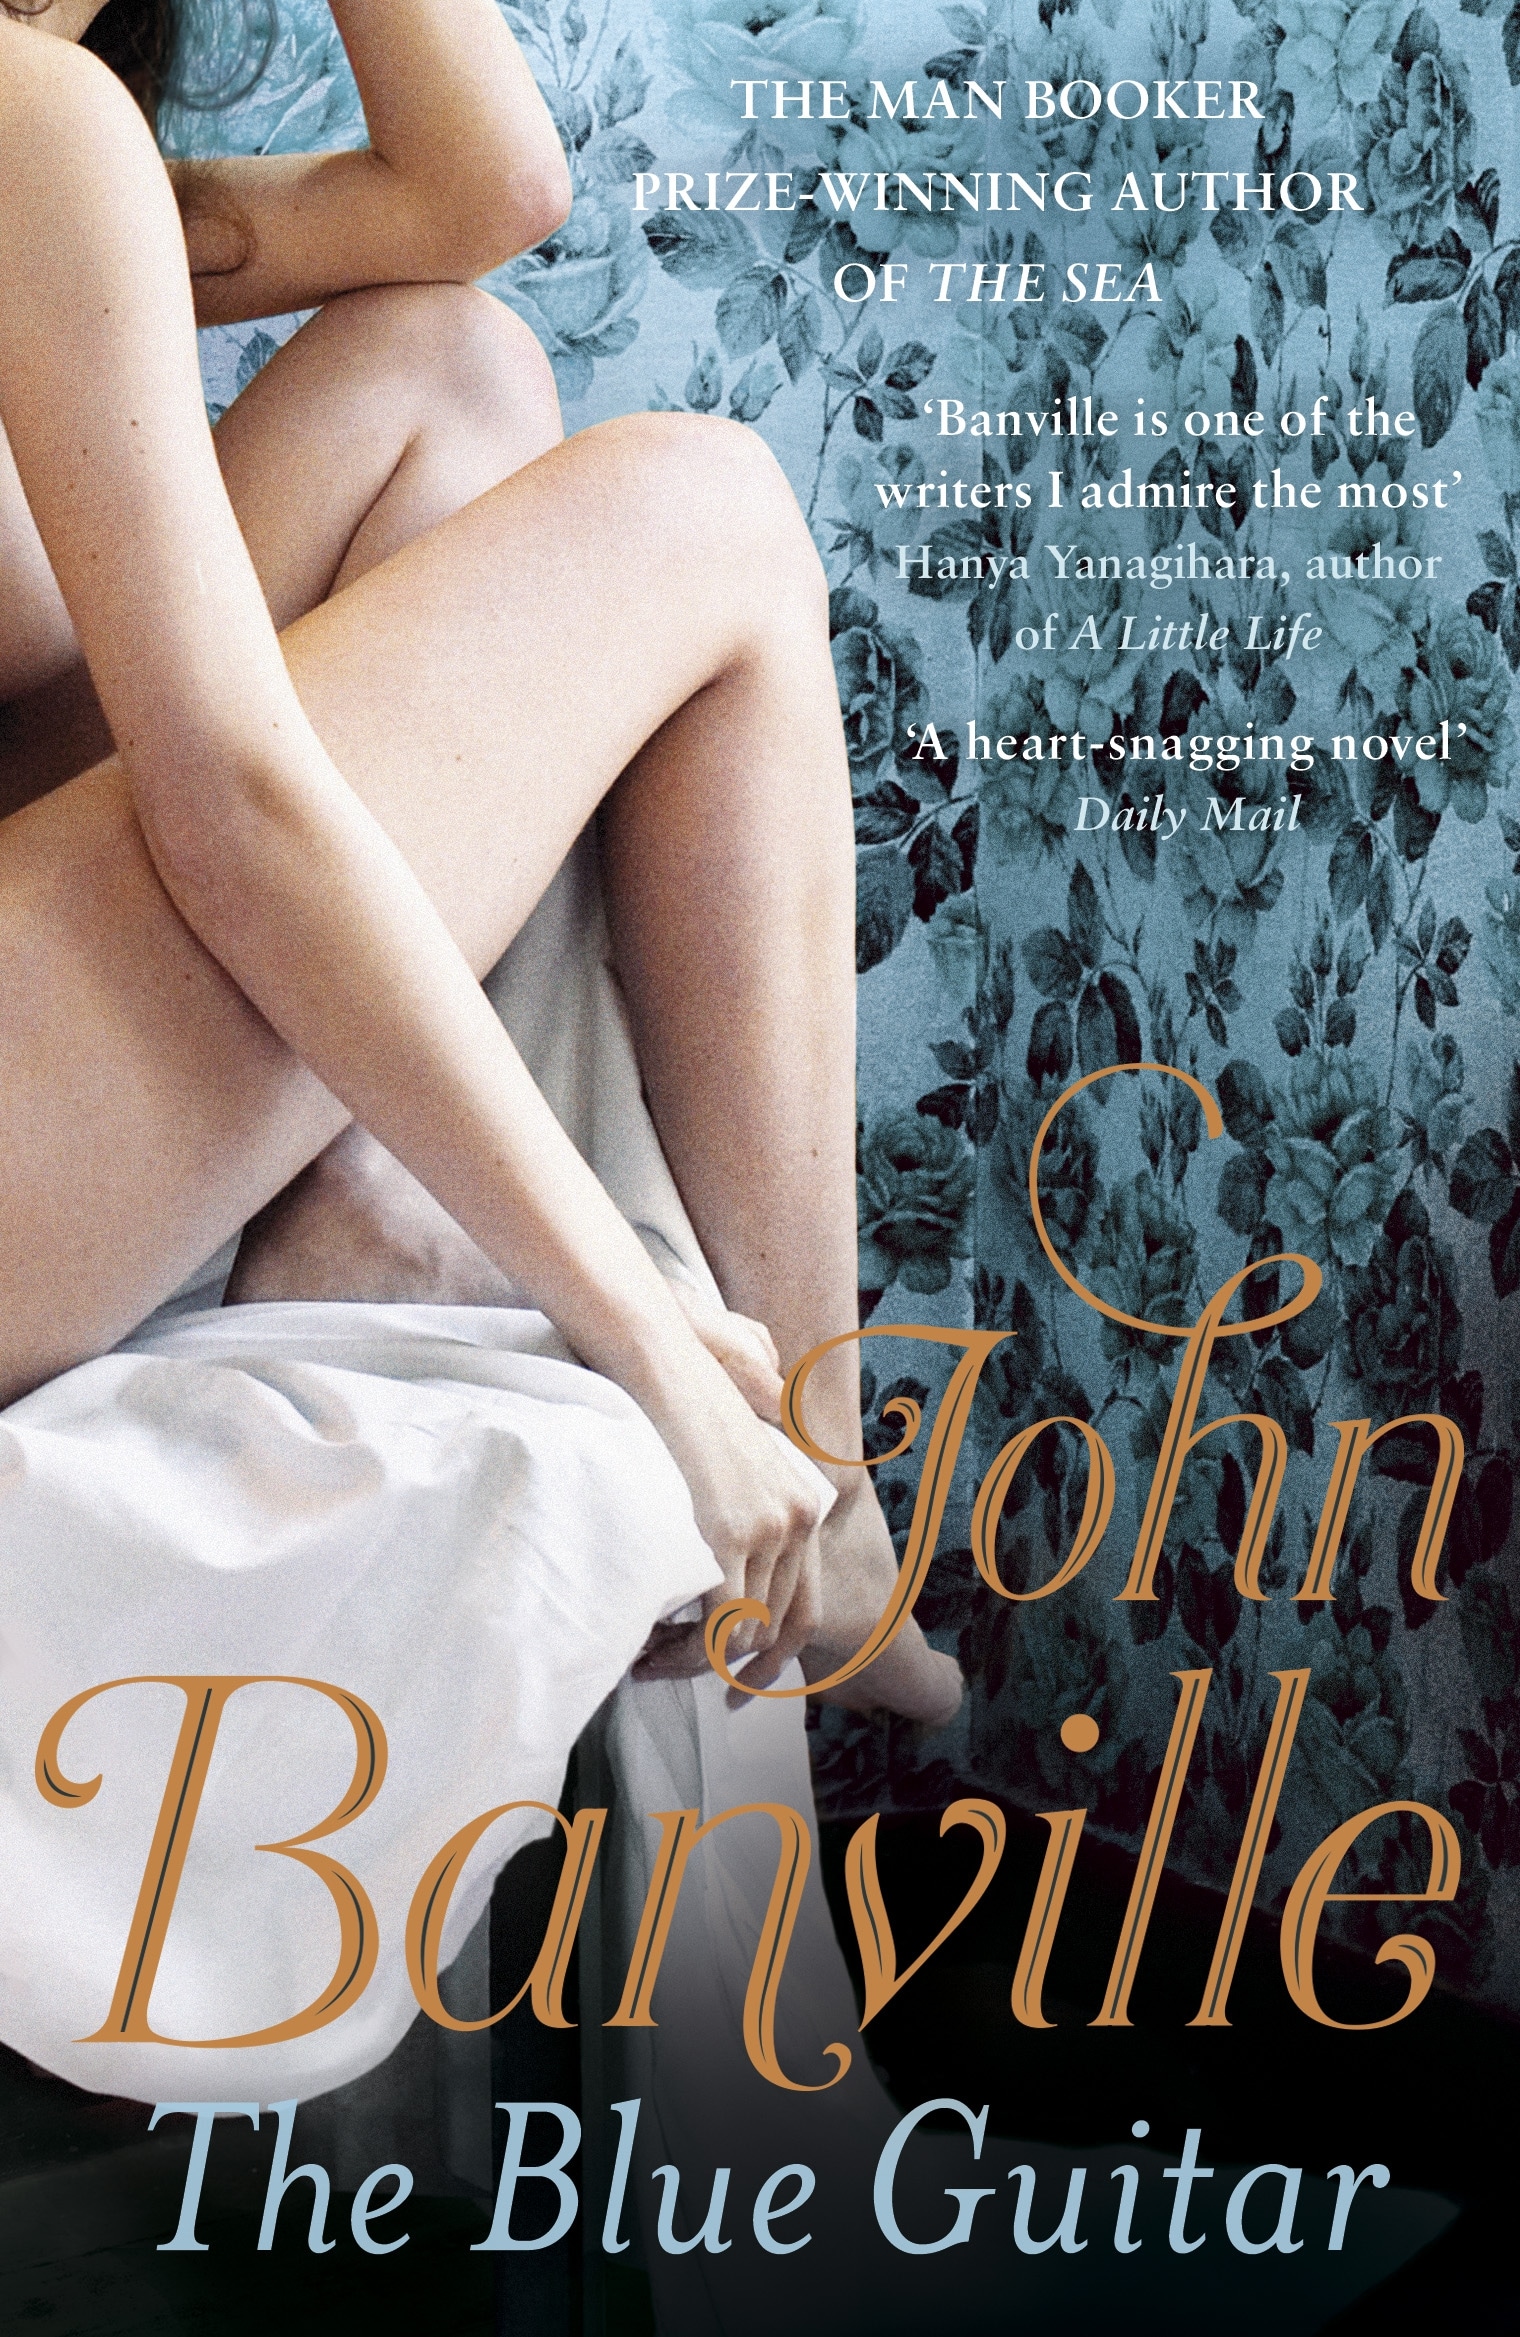 Book “The Blue Guitar” by John Banville — June 30, 2016